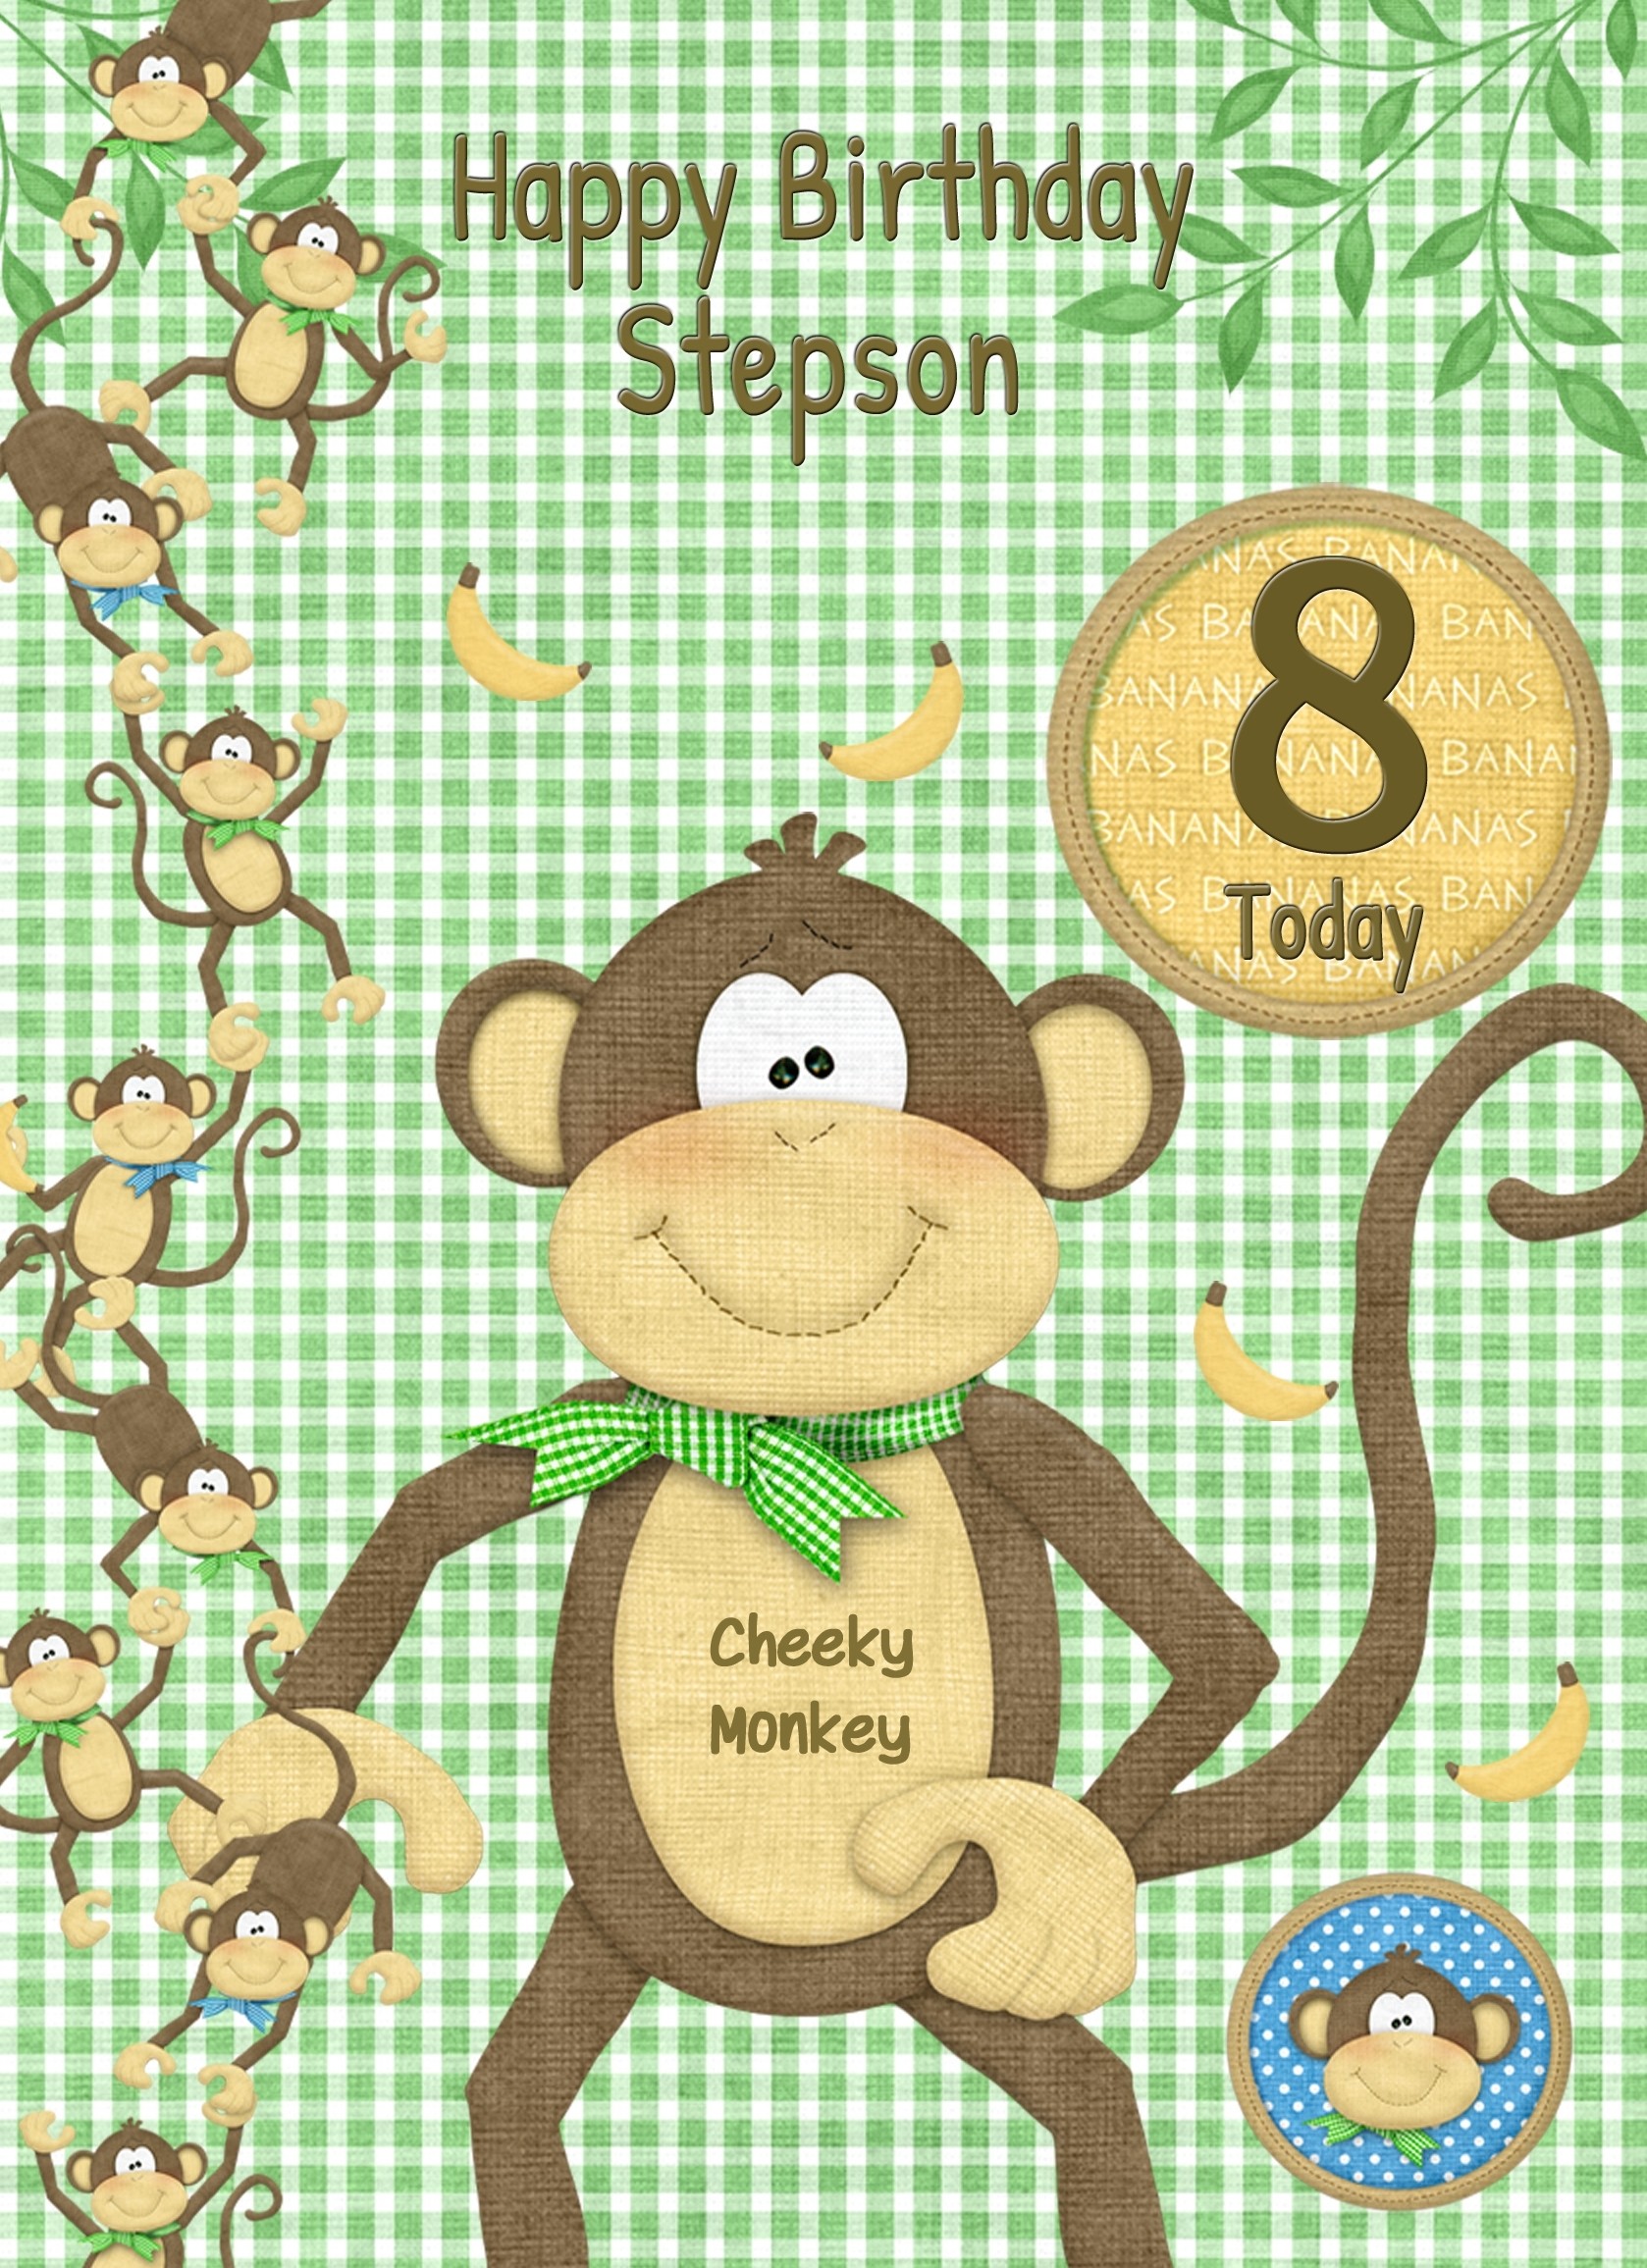 Kids 8th Birthday Cheeky Monkey Cartoon Card for Stepson